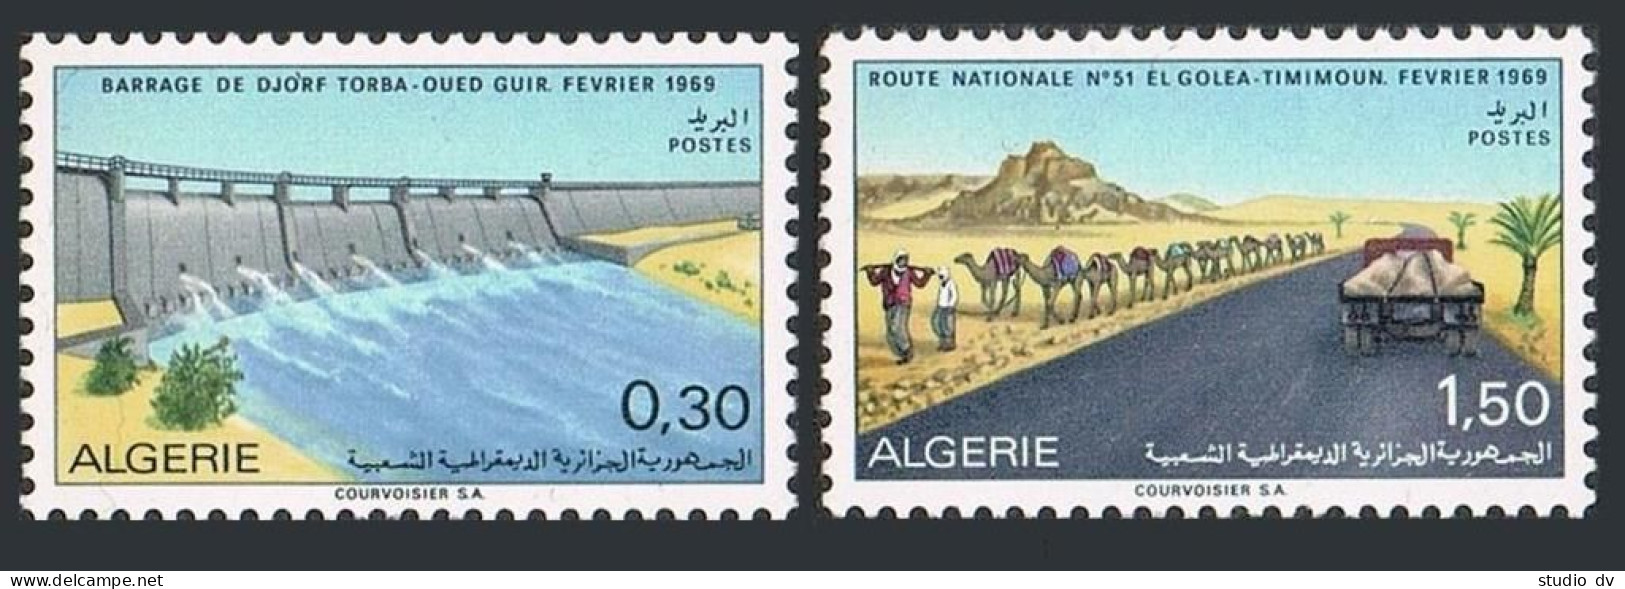 Algeria 415-416,MNH.Michel 521-522 Irrigation Dam;Highway,truck,Caravan.1969. - Algérie (1962-...)